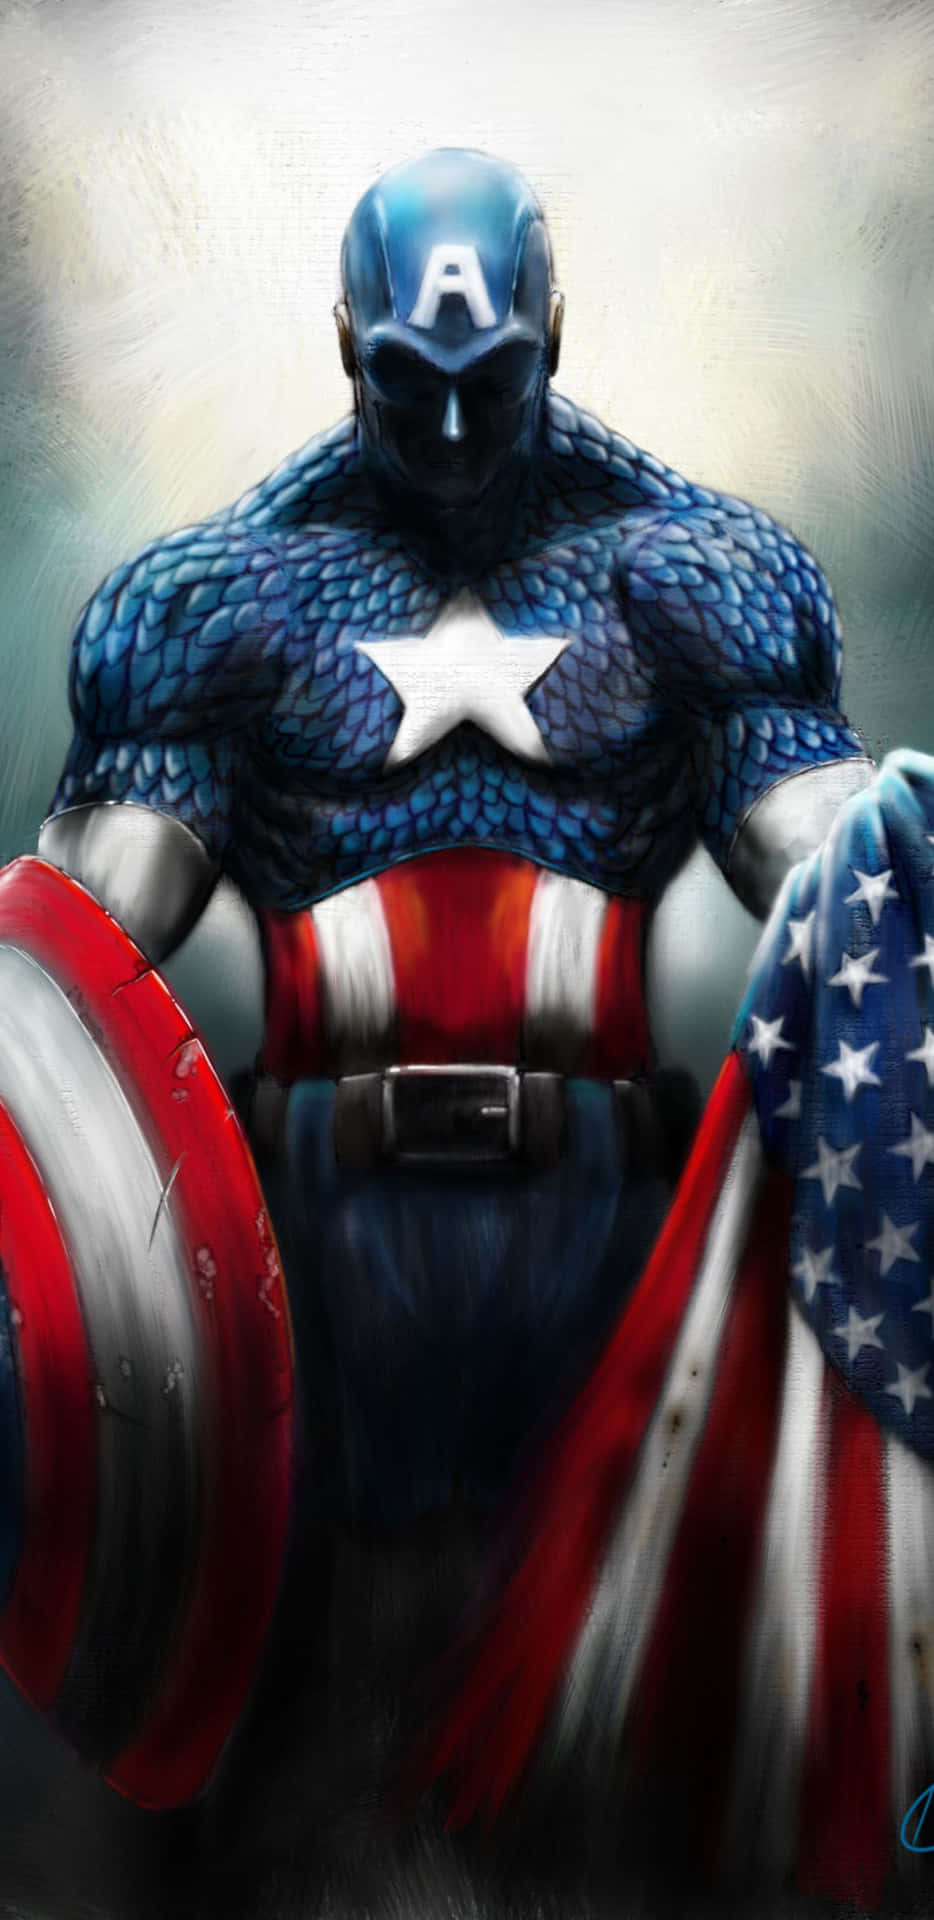 Pixel3xl Captain America Bakgrund Illustration Konst.